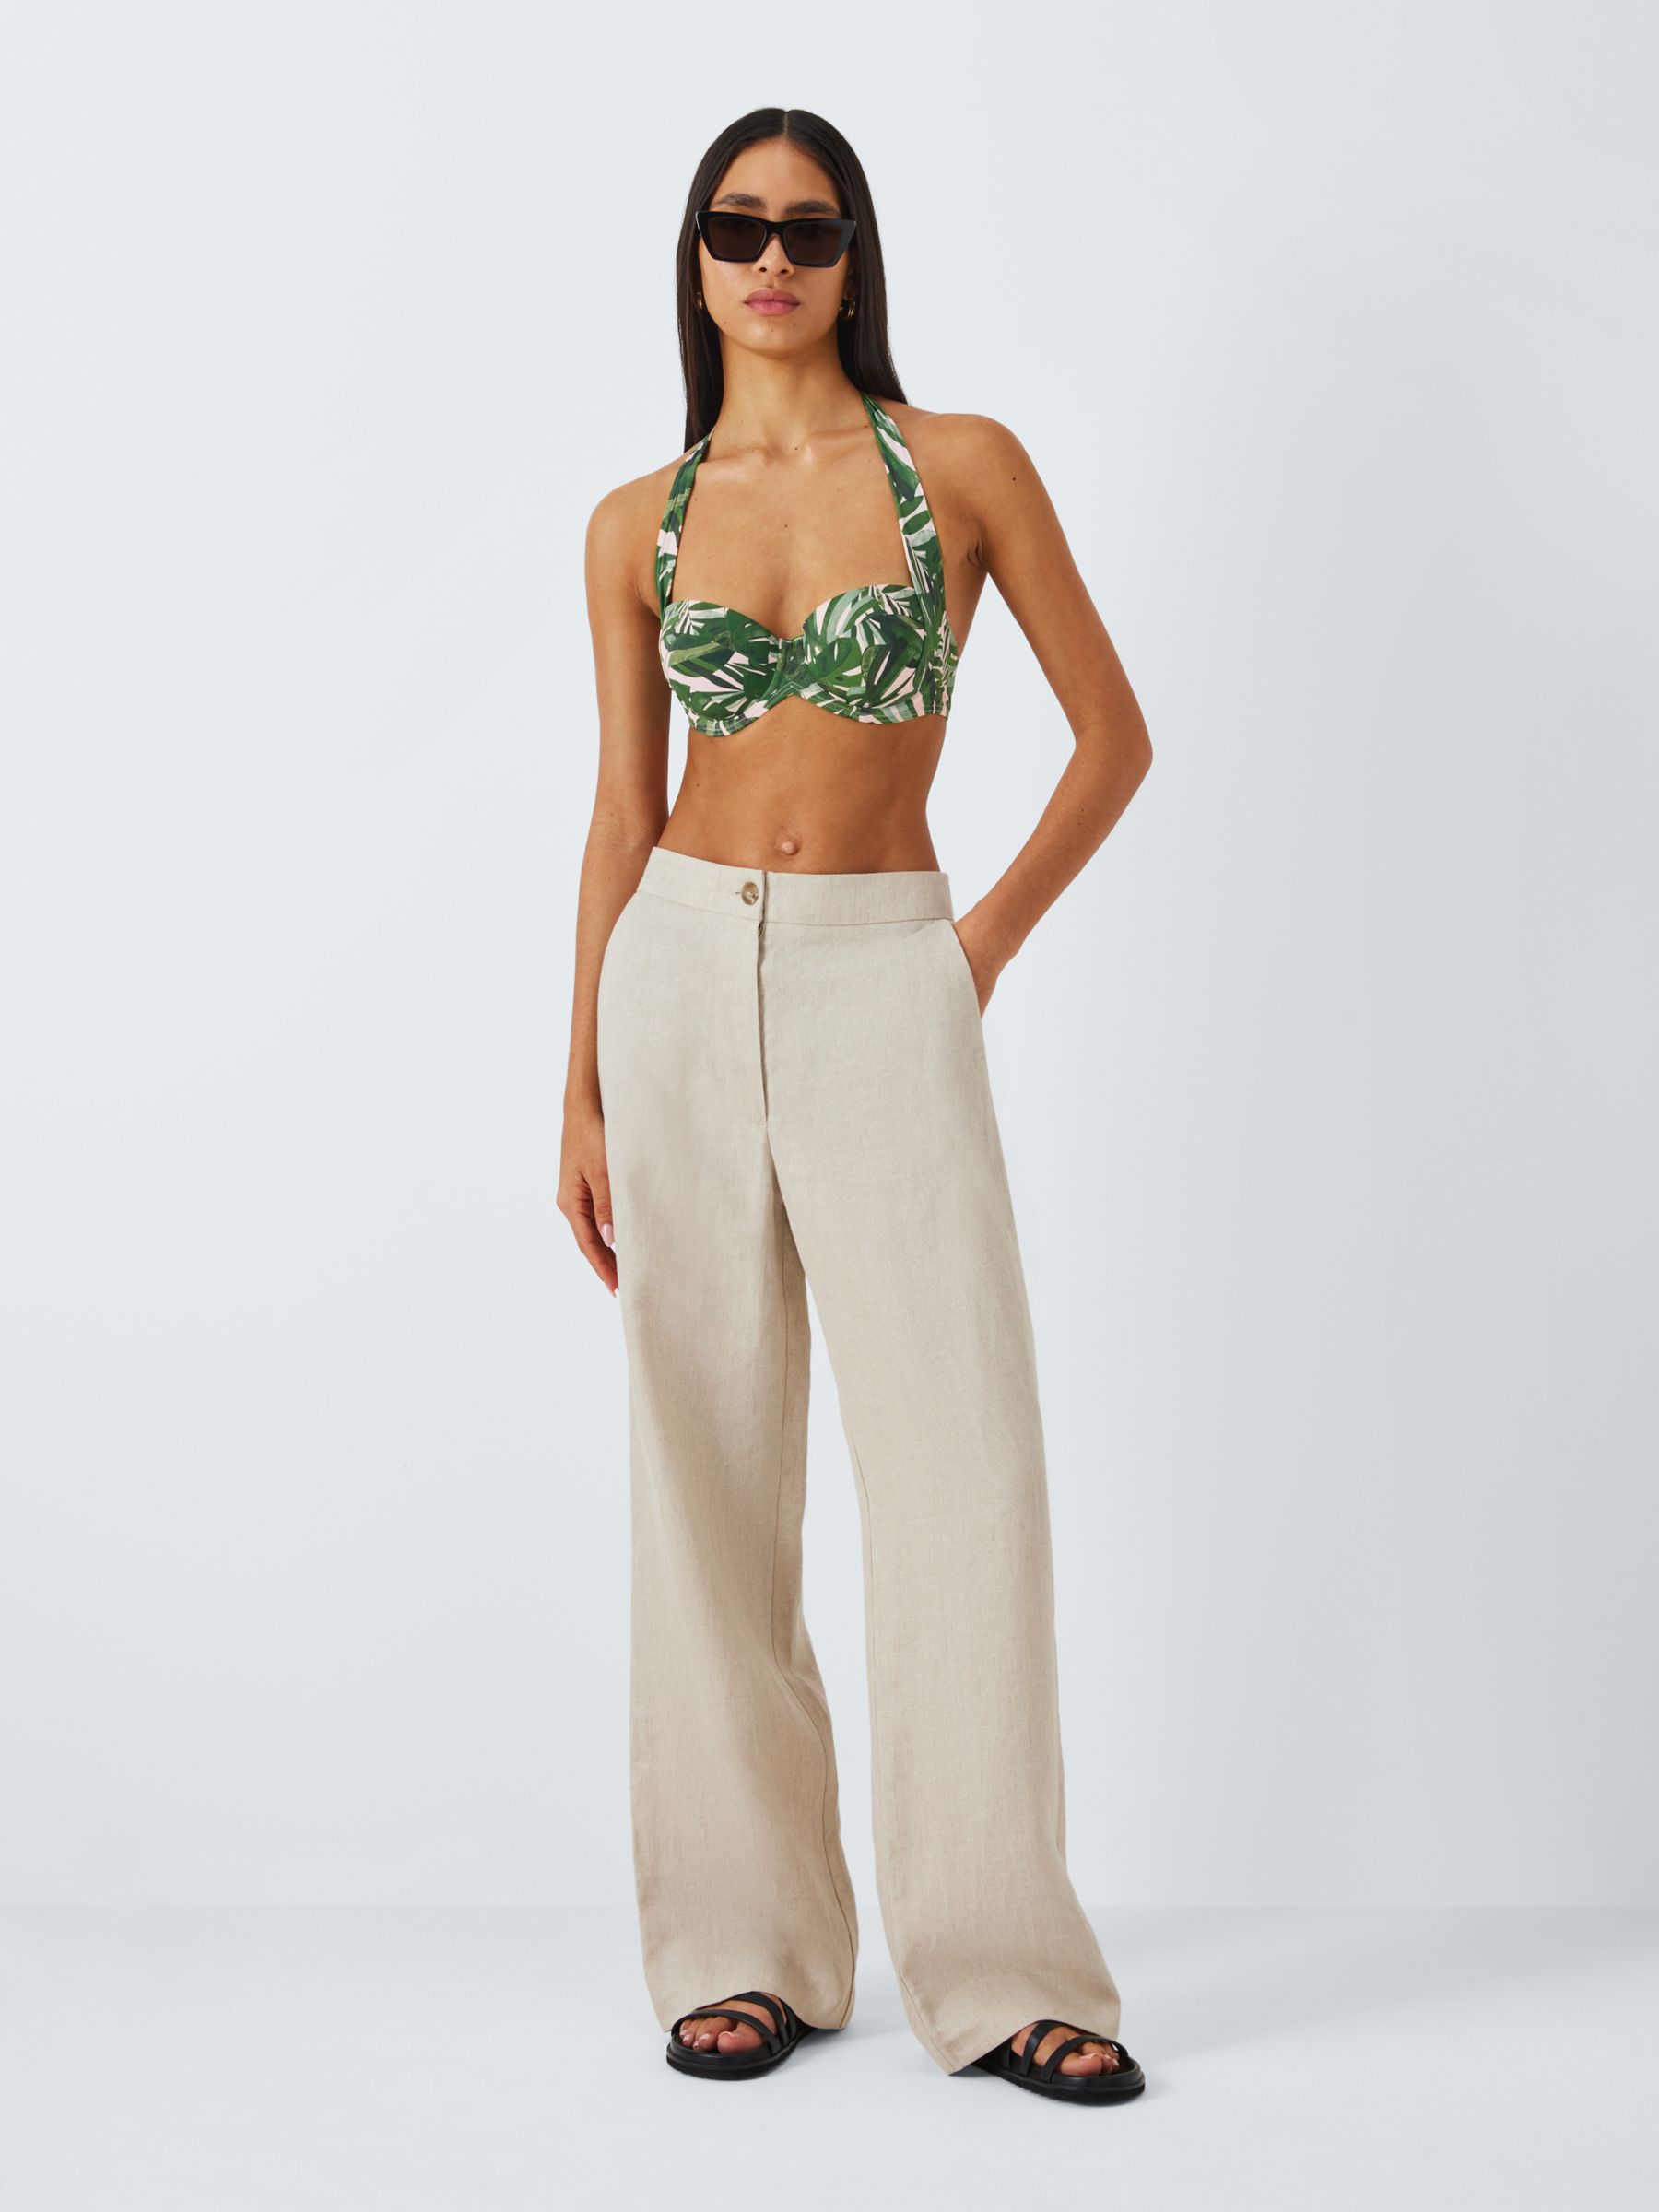 John Lewis Tropic Palm Leaf Print Sling Halter Bikini Top, Khaki, 34DD